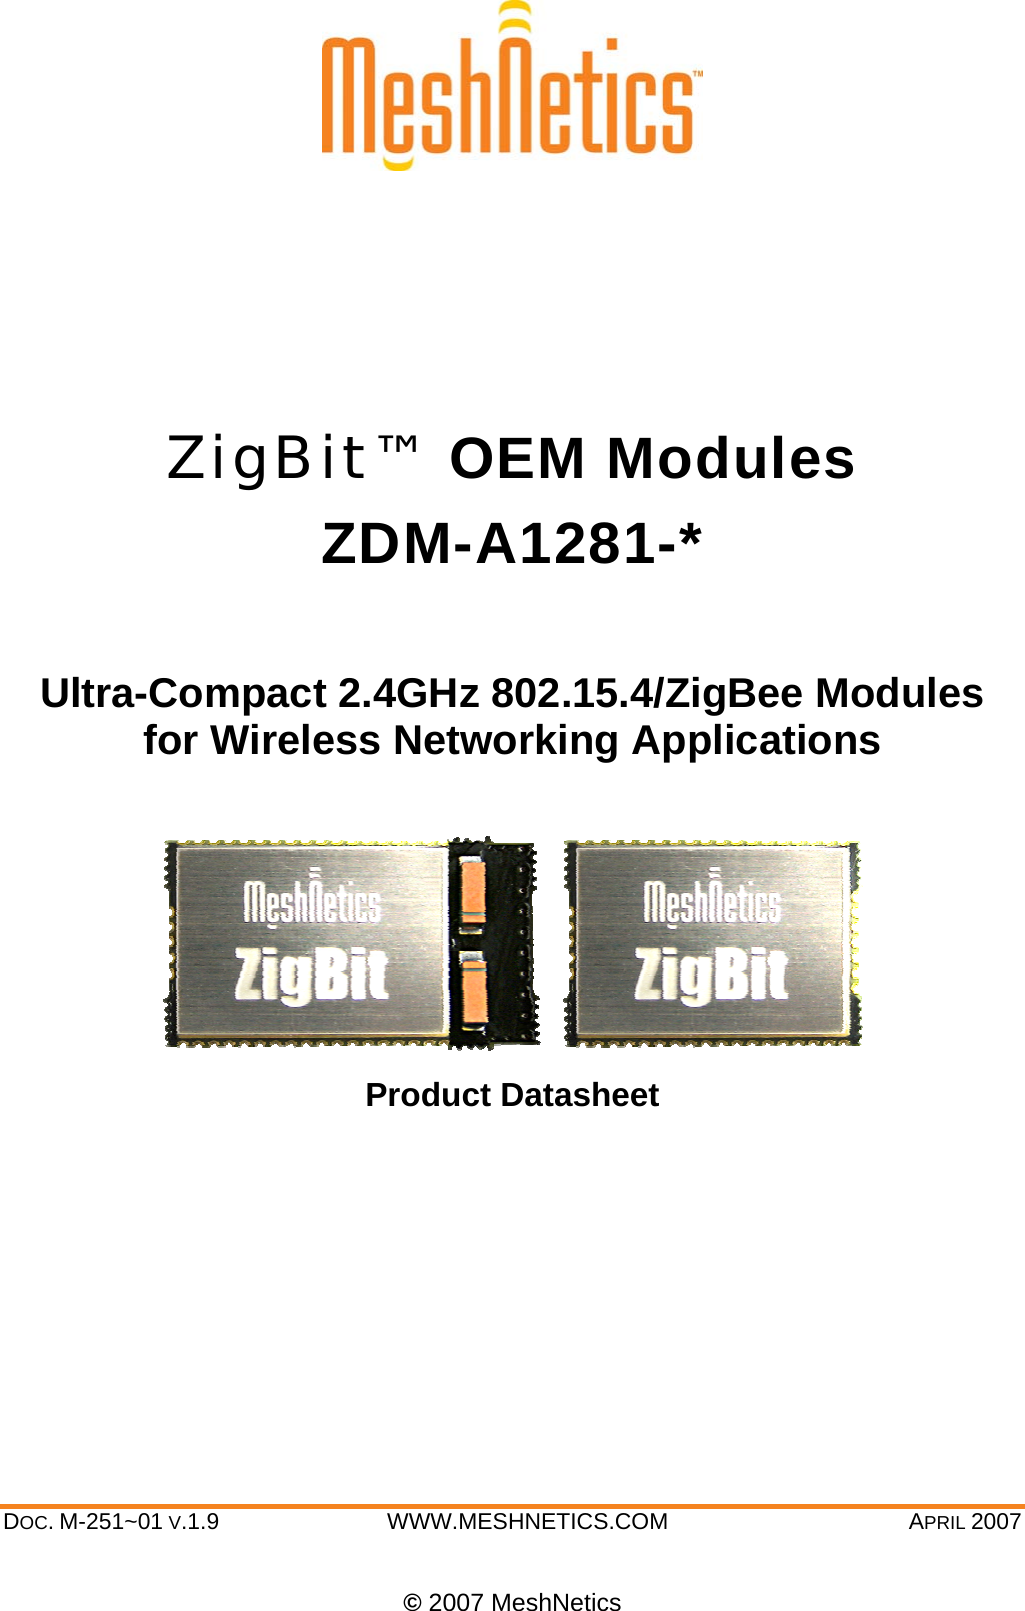  DOC. M-251~01 V.1.9 WWW.MESHNETICS.COM  APRIL 2007  © 2007 MeshNetics     ZigBit™ OEM Modules ZDM-A1281-*  Ultra-Compact 2.4GHz 802.15.4/ZigBee Modules for Wireless Networking Applications   Product Datasheet       